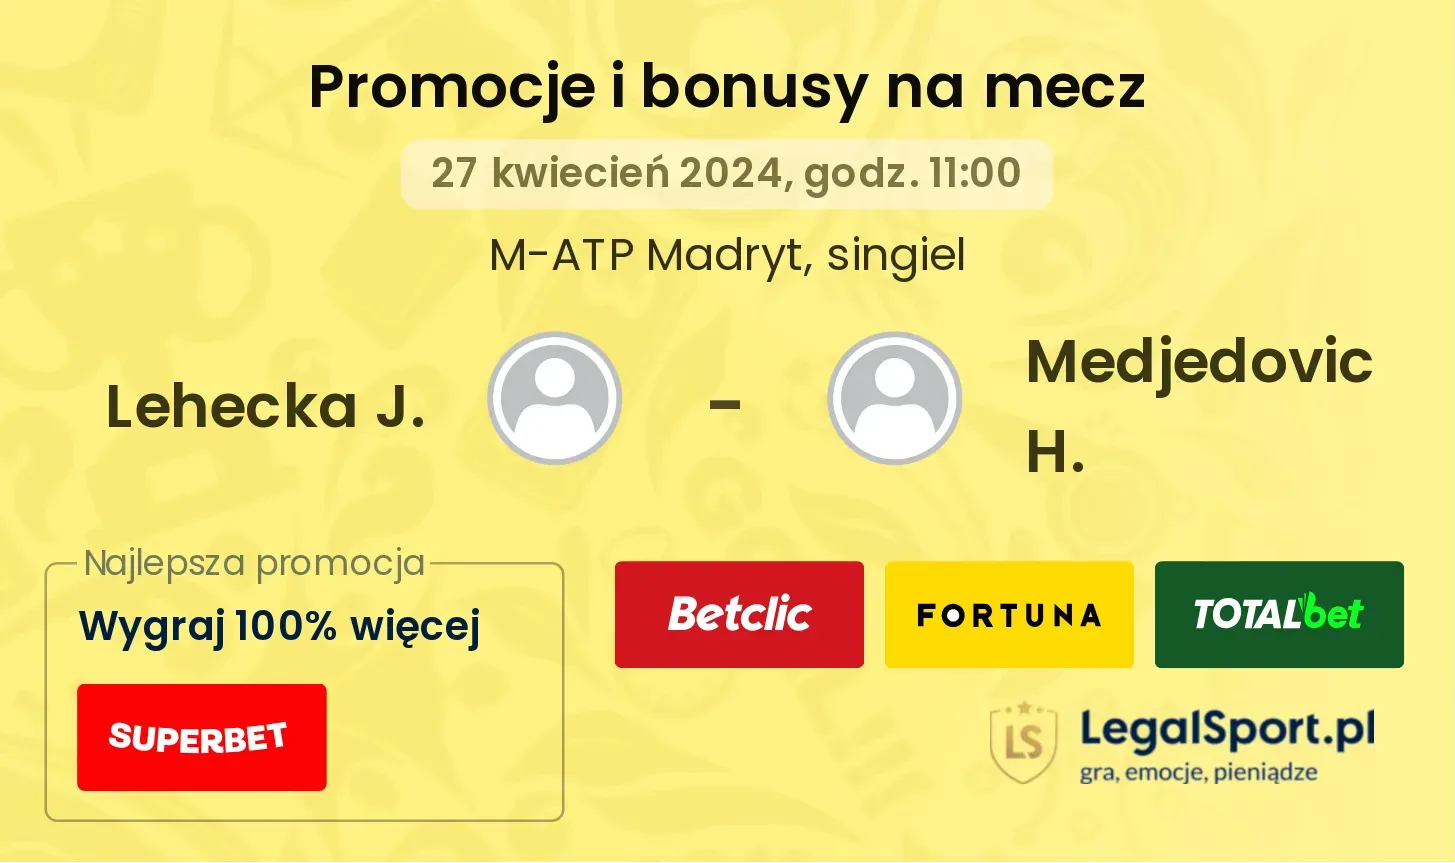 Lehecka J. - Medjedovic H. promocje bonusy na mecz